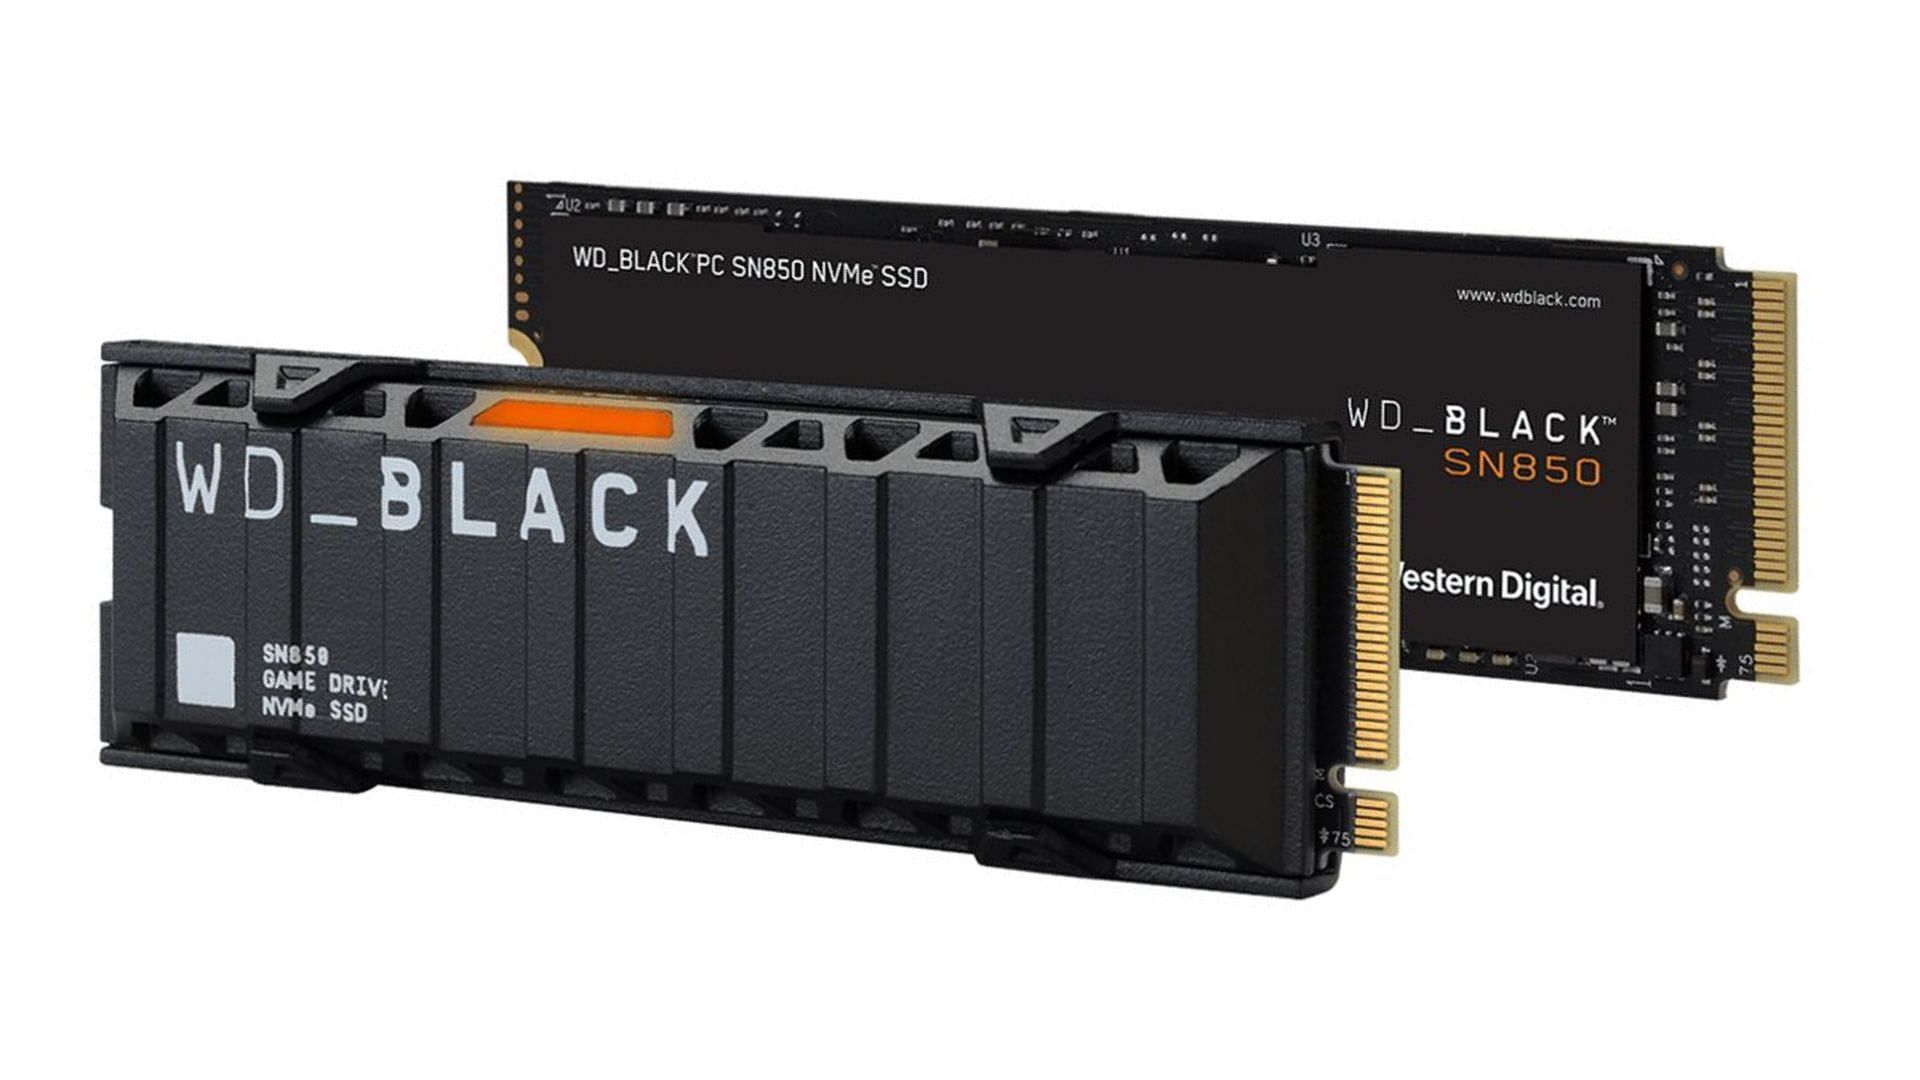 The WD Black SN850 NVMe SSD (Image via Western Digital)